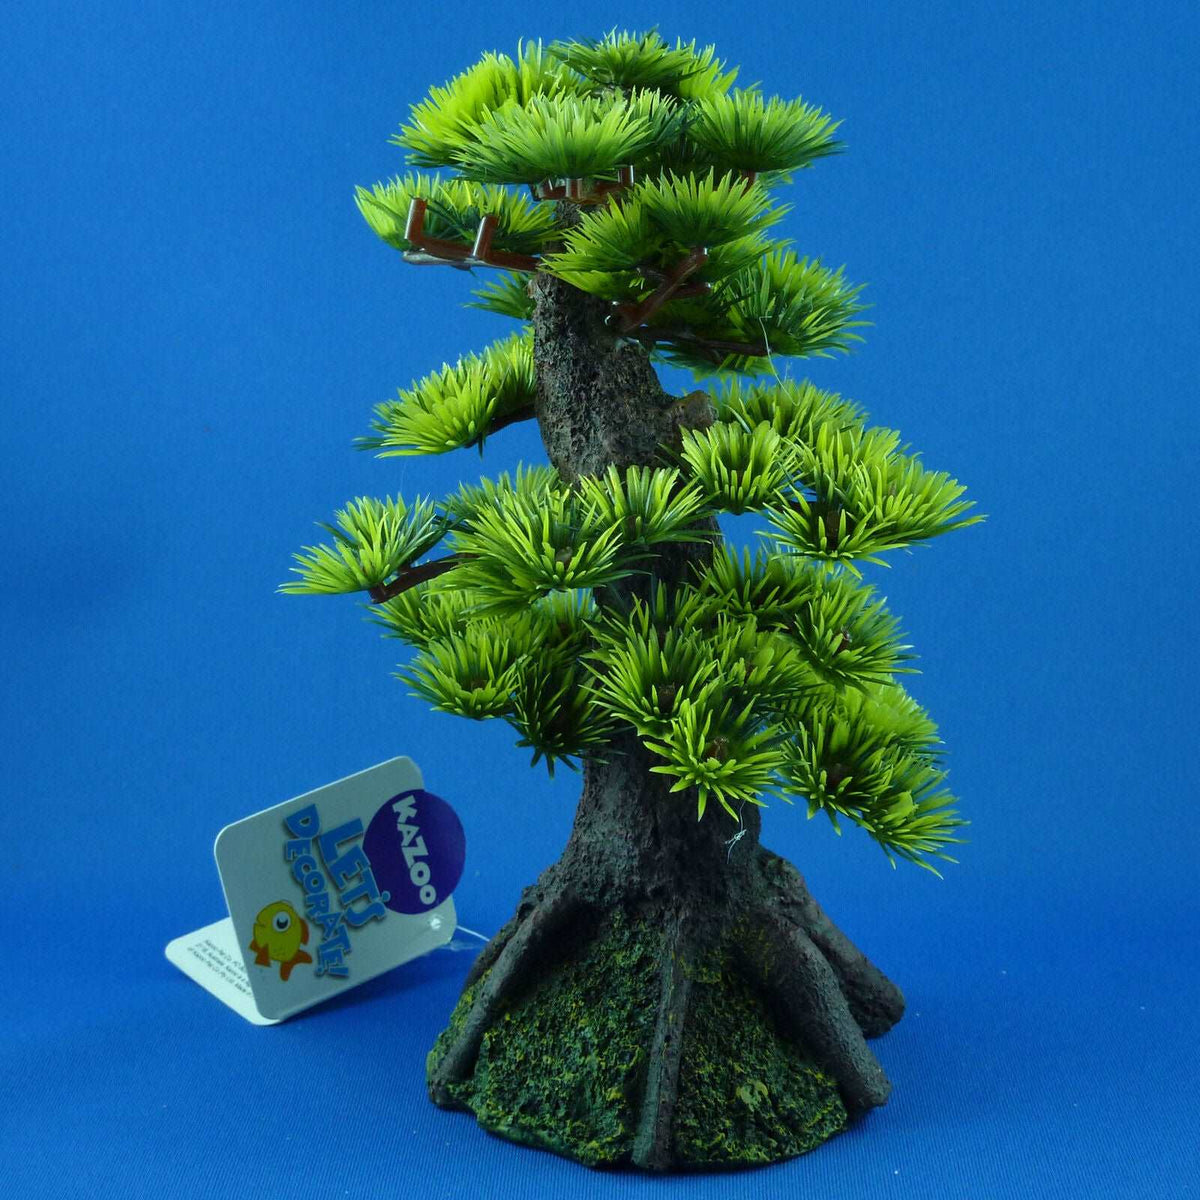 New Kazoo Bonsai Tree Aquarium ornament Small, Fantastic looking tree!